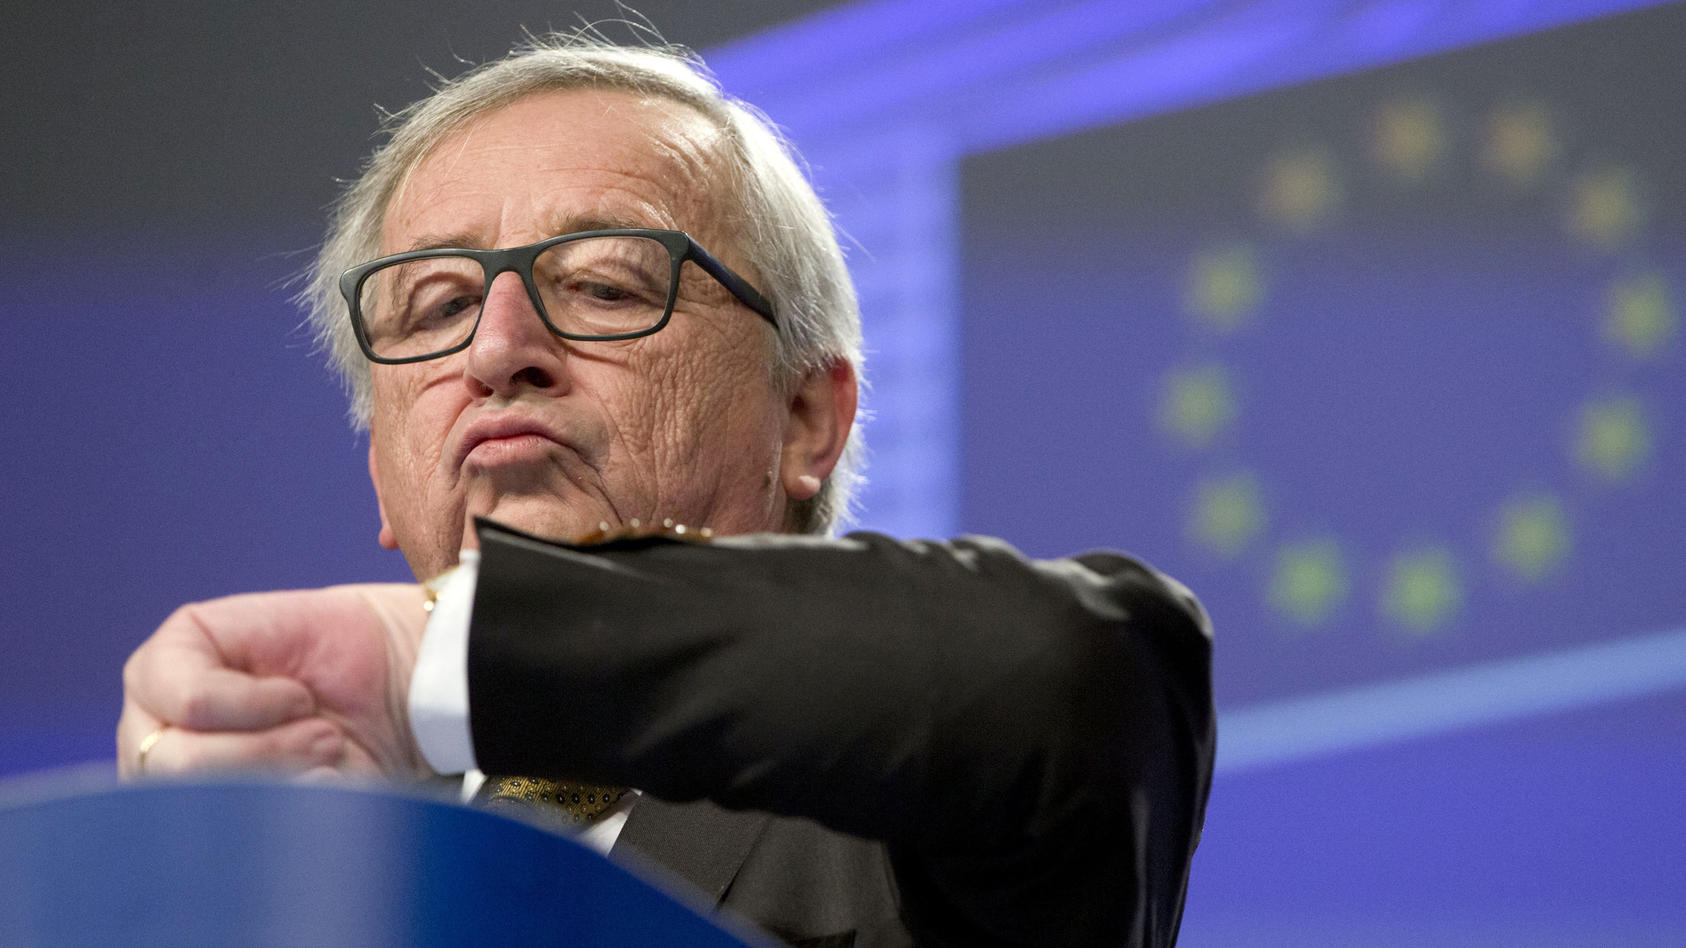 EU-Kommissionspräsident Jean-Claude Juncker: "Die Zeitumstellung gehört abgeschafft."